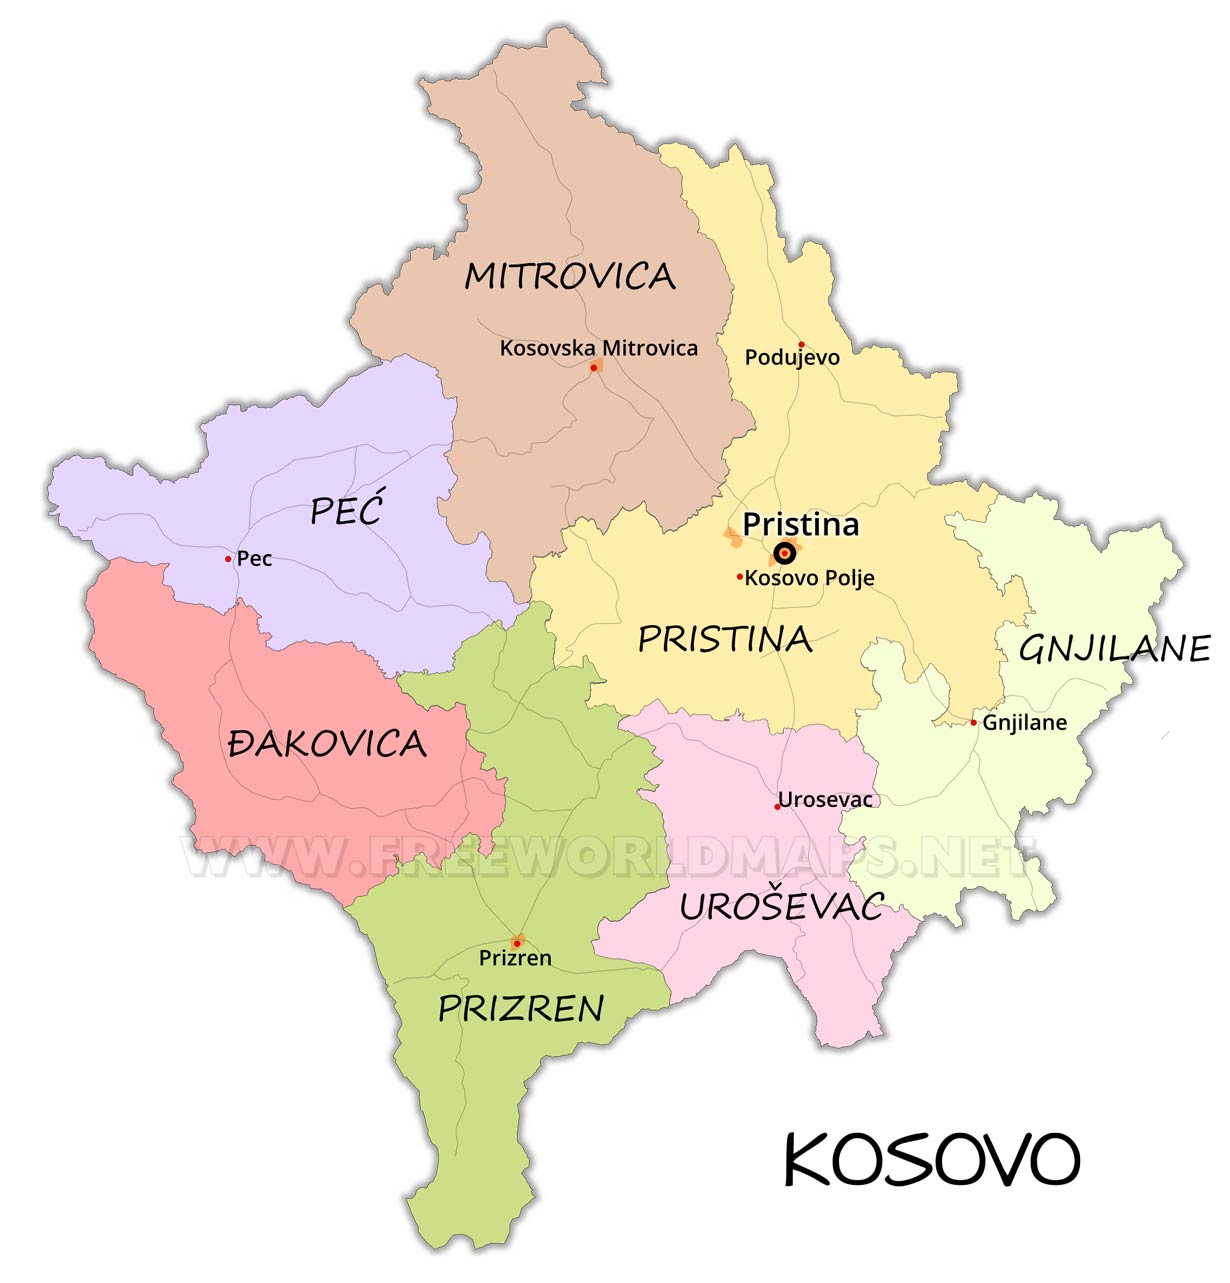 mapa-de-kosovo